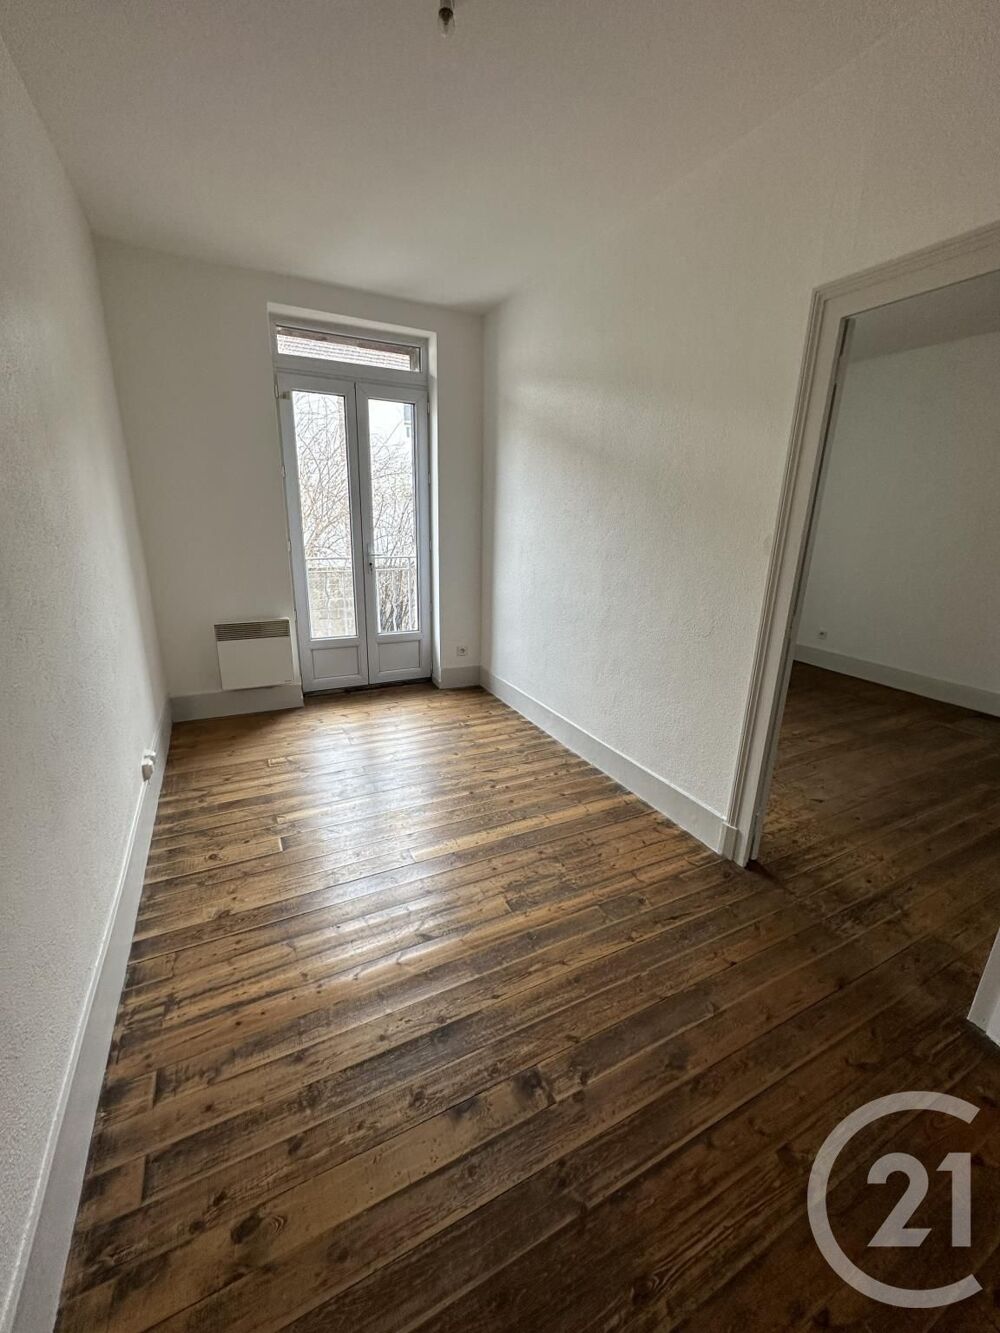 location Appartement - 2 pice(s) - 23 m Montluon (03100)